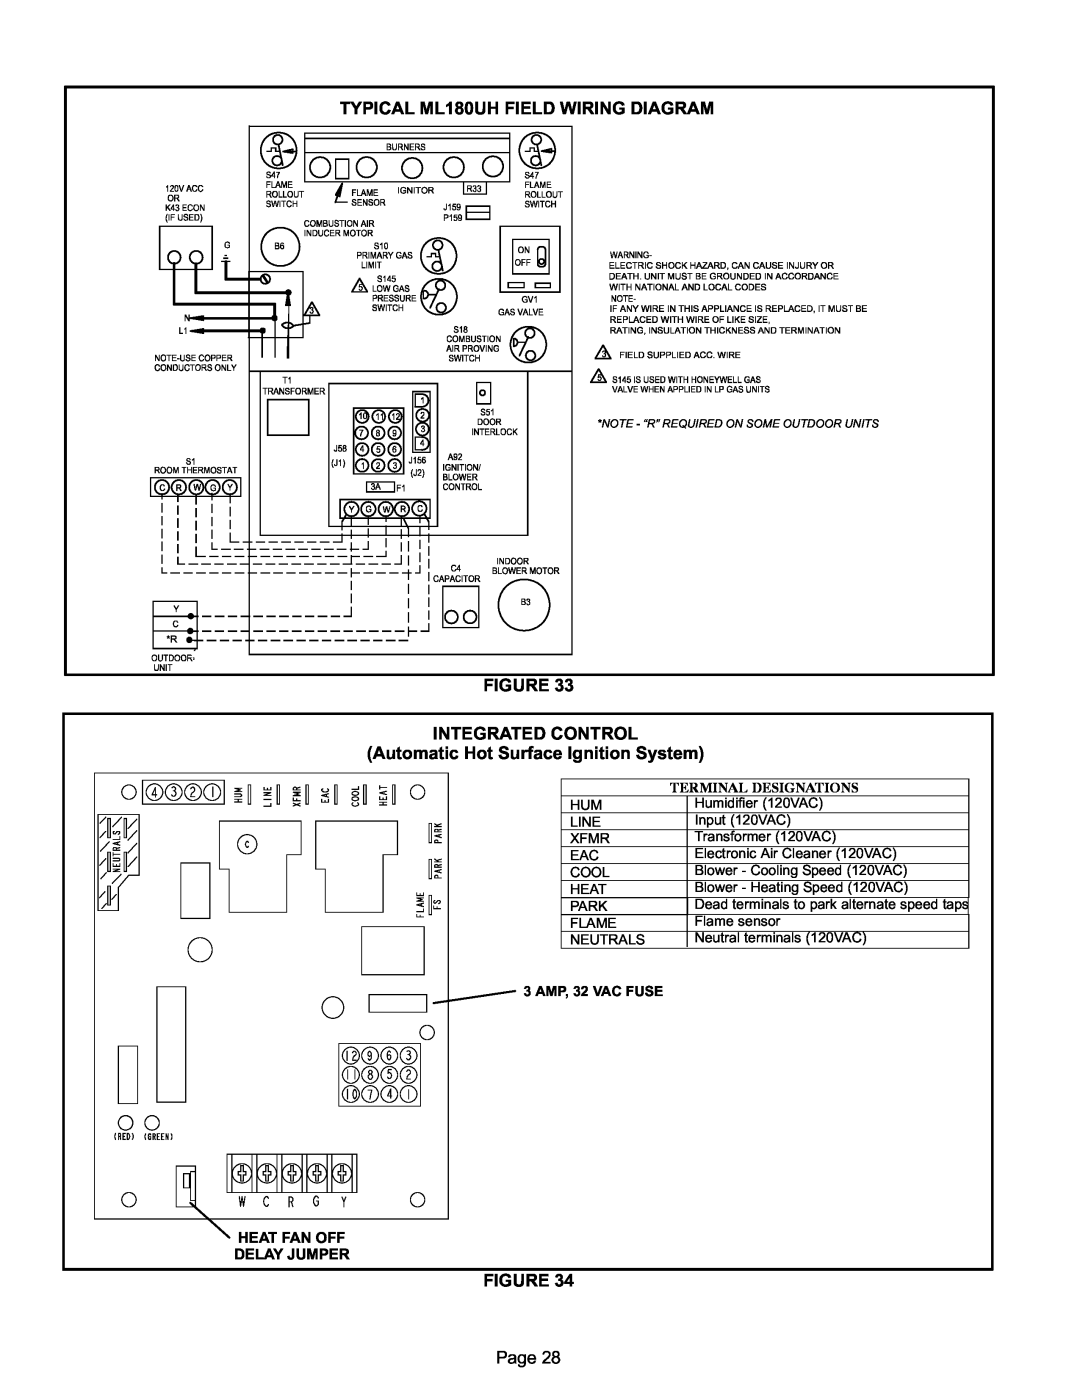 Lennox International Inc Merit Series Gas Furnace TYPICAL ML180UH FIELD WIRING DIAGRAM, Figure Integrated Control 